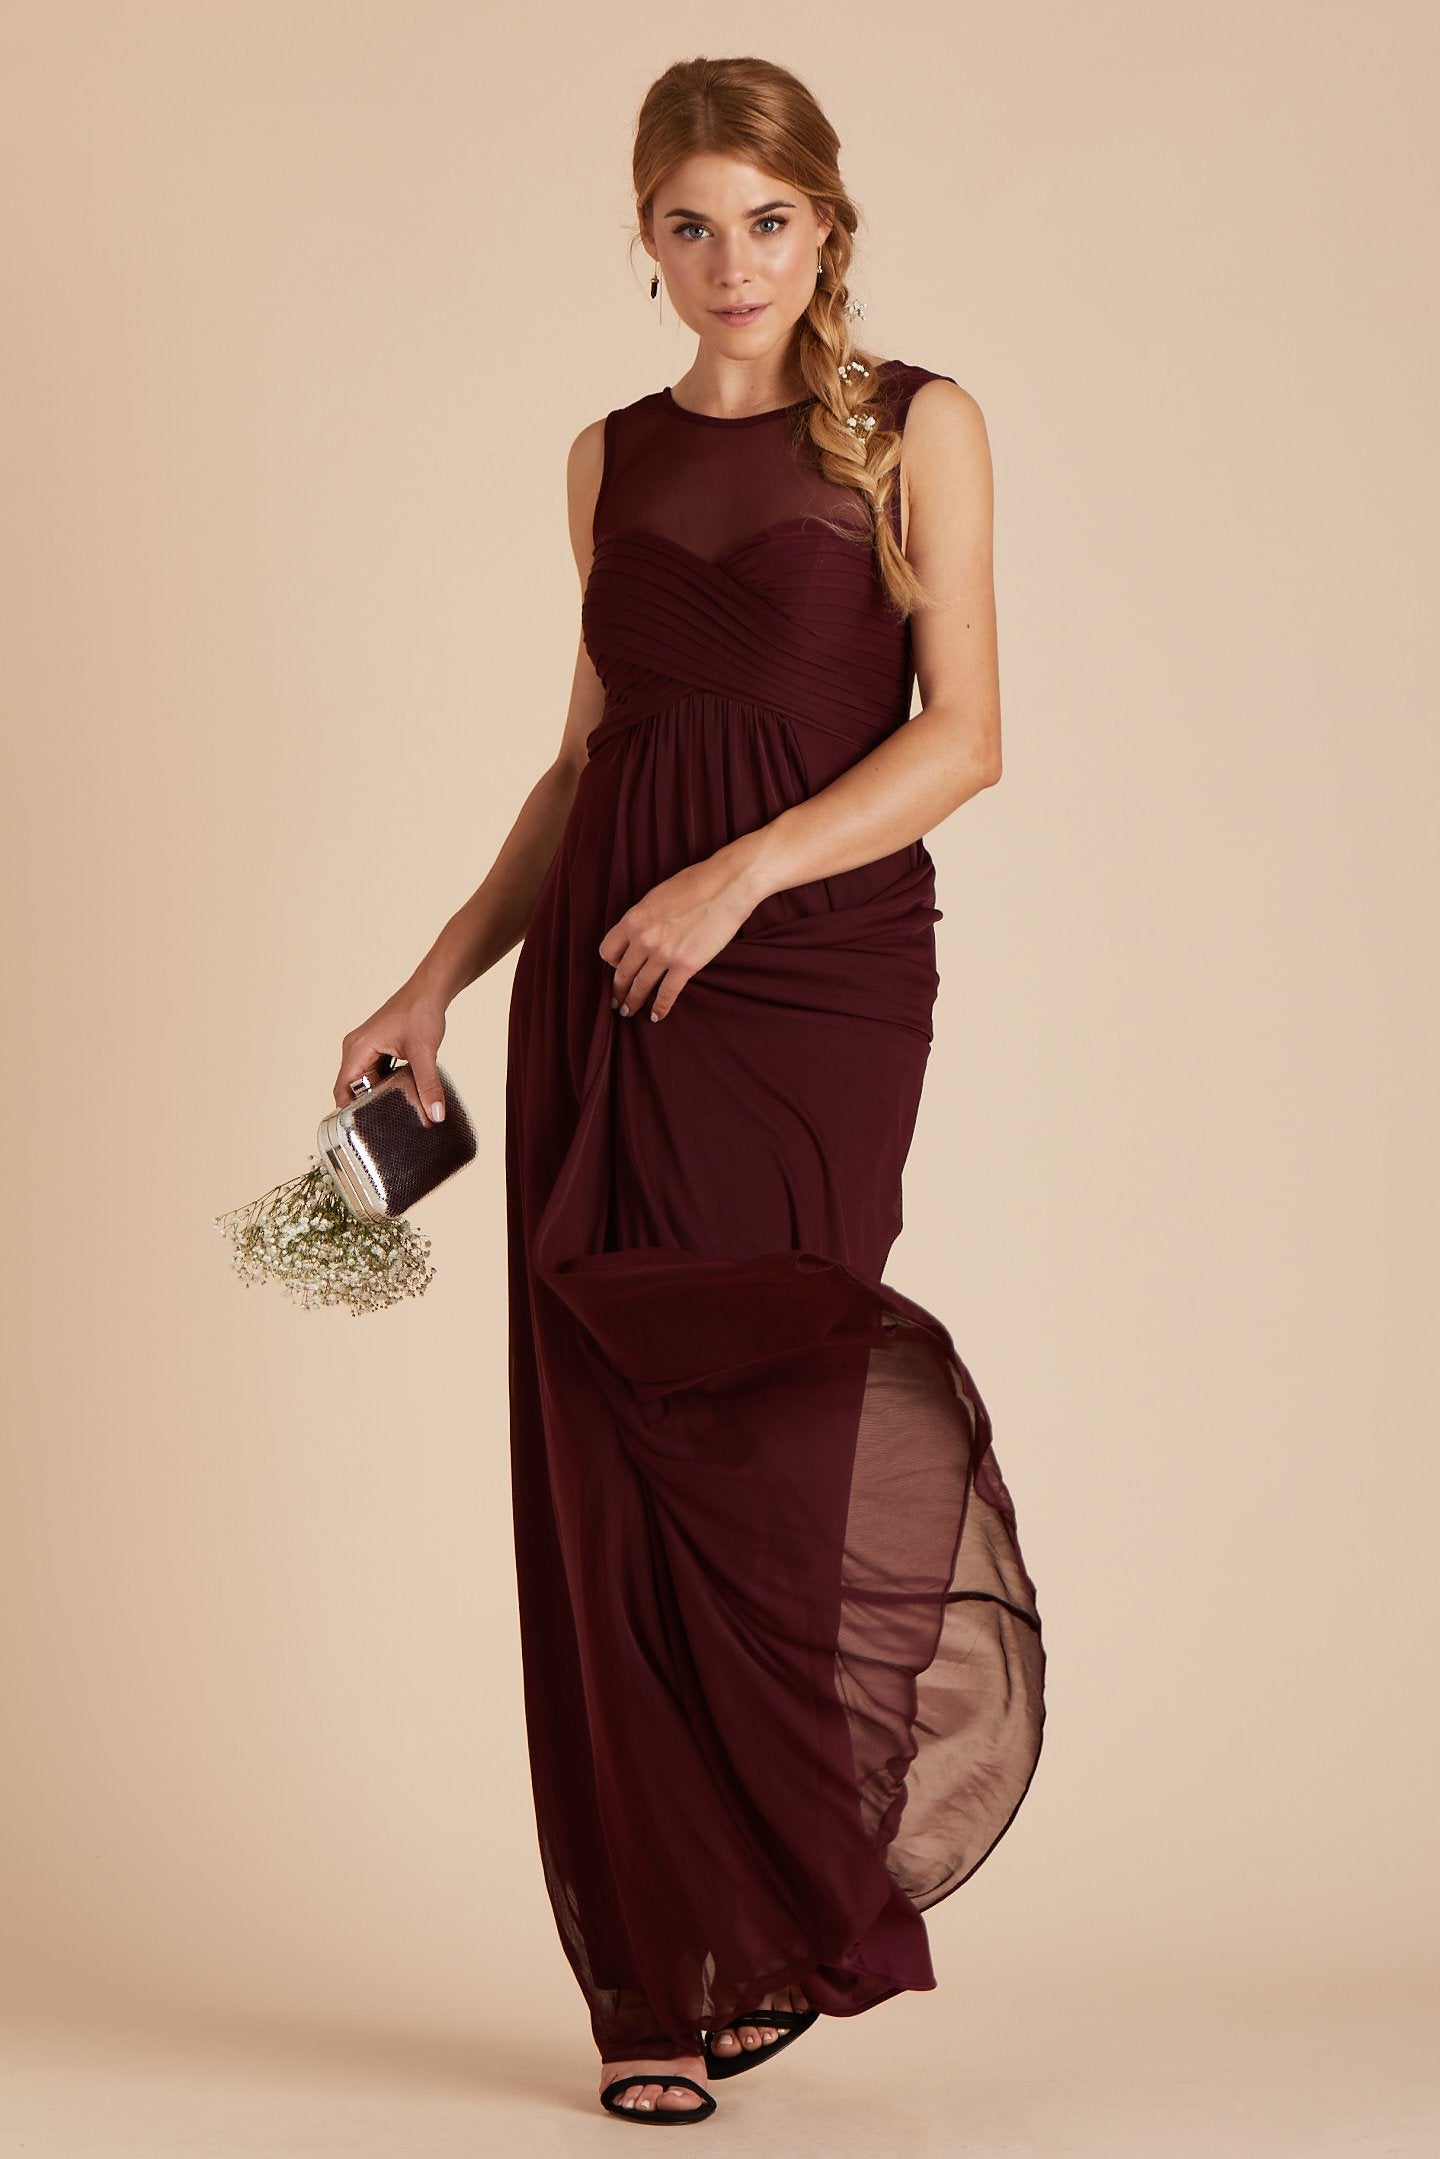 Ryan bridesmaid dress in cabernet burgundy chiffon by Birdy Grey, front view